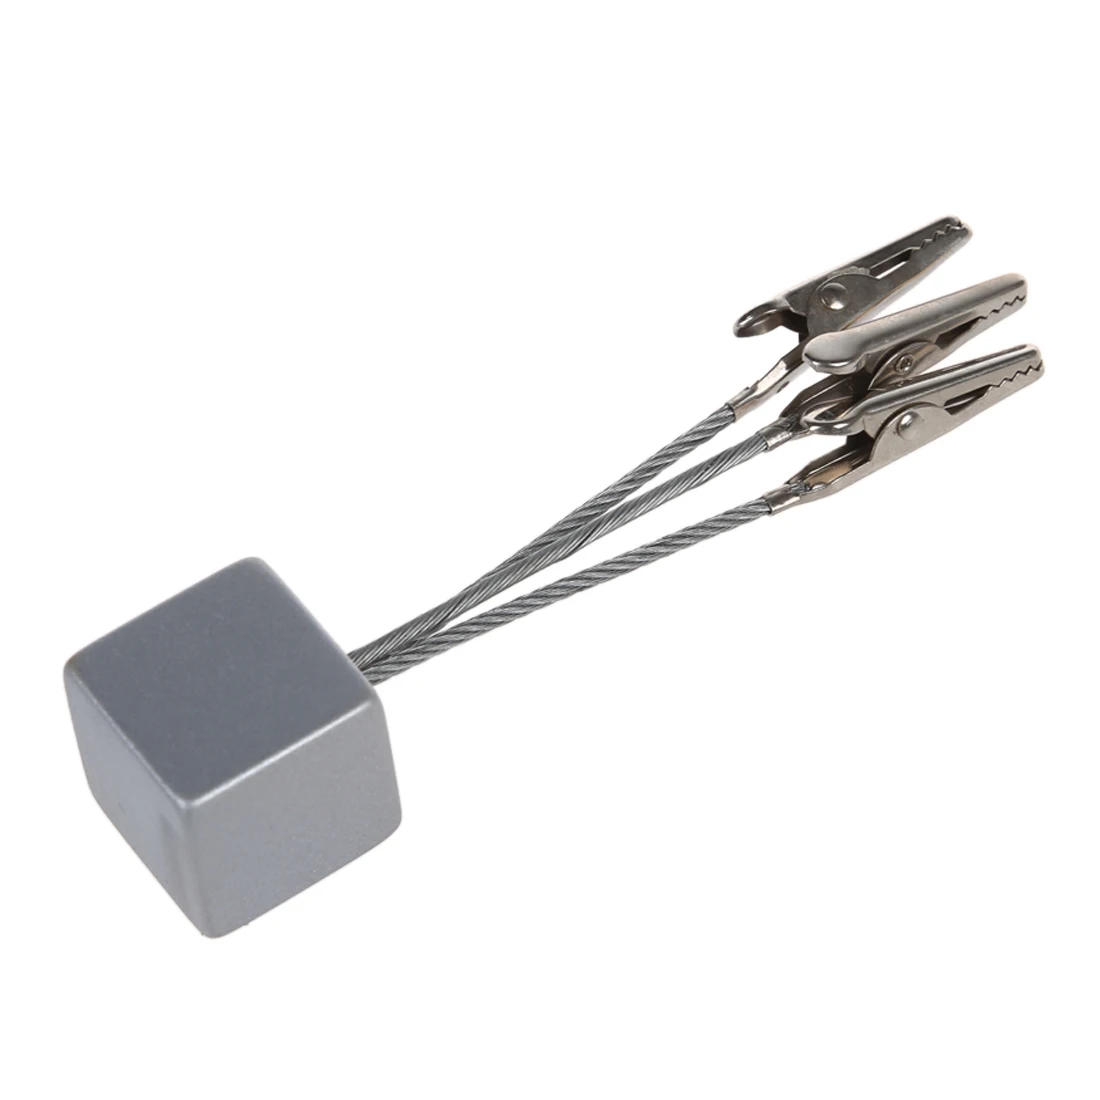 3 зажима Cube base wire memo holder paper Note clip-серебристо-серый